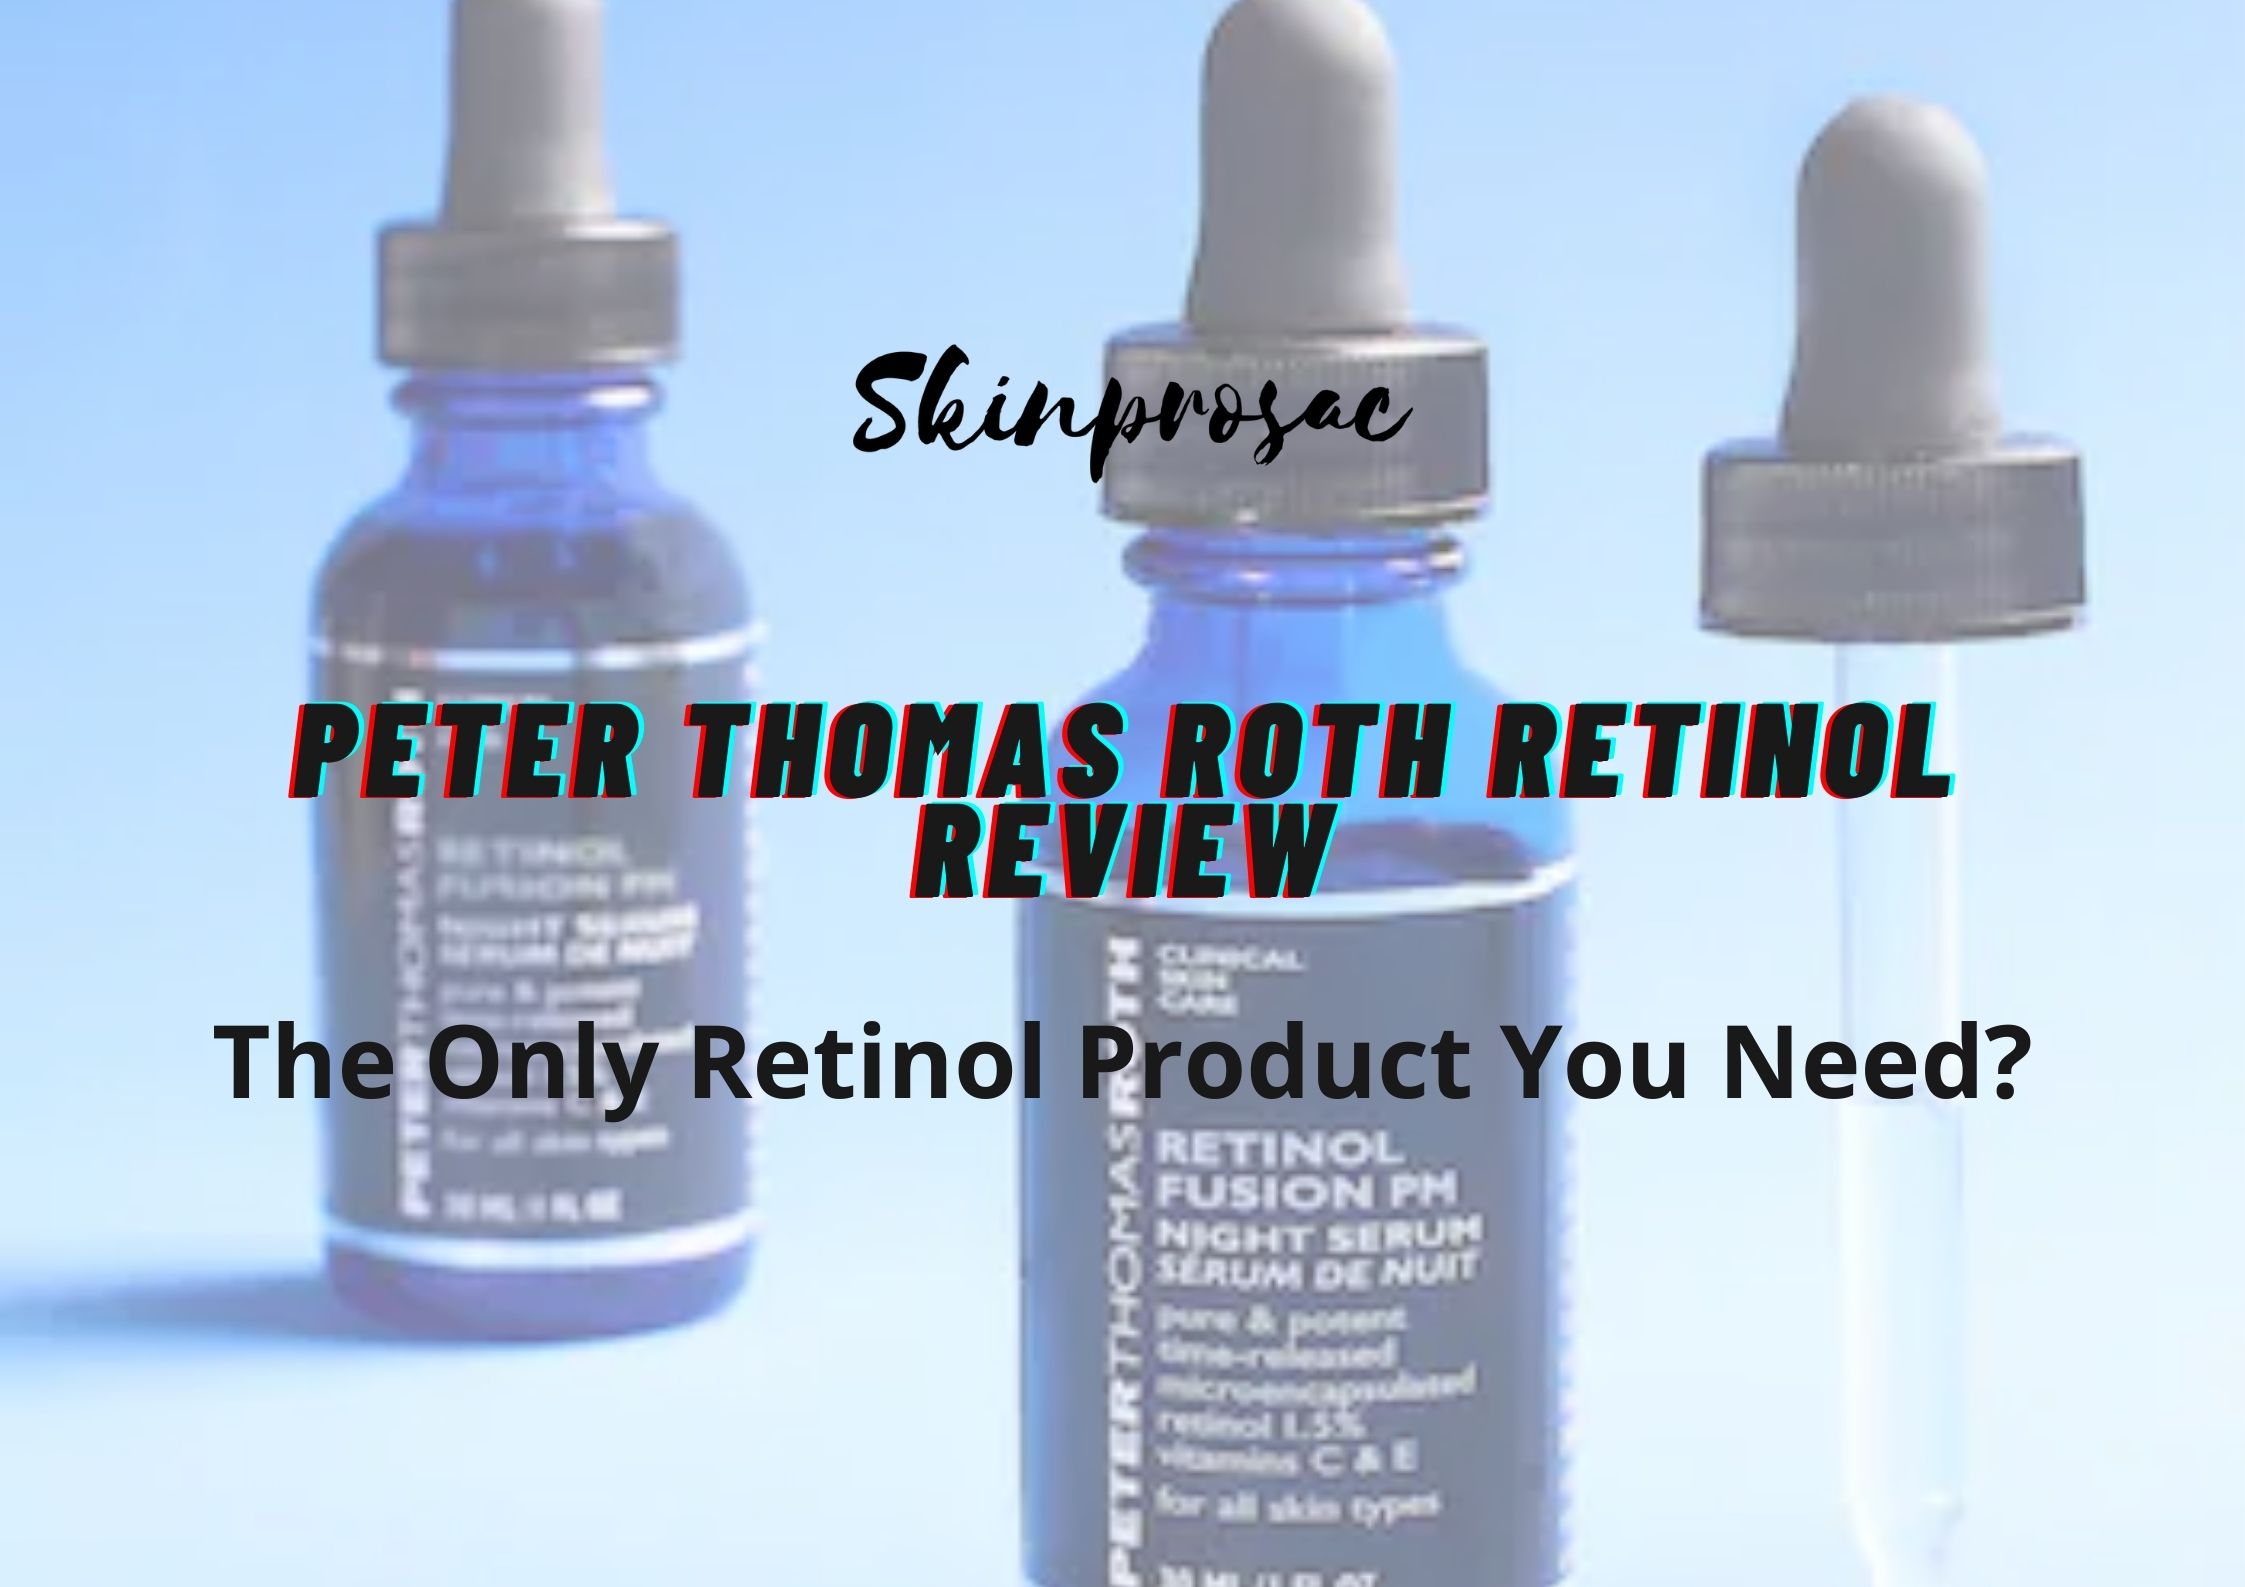 Peter Thomas Roth Retinol Review